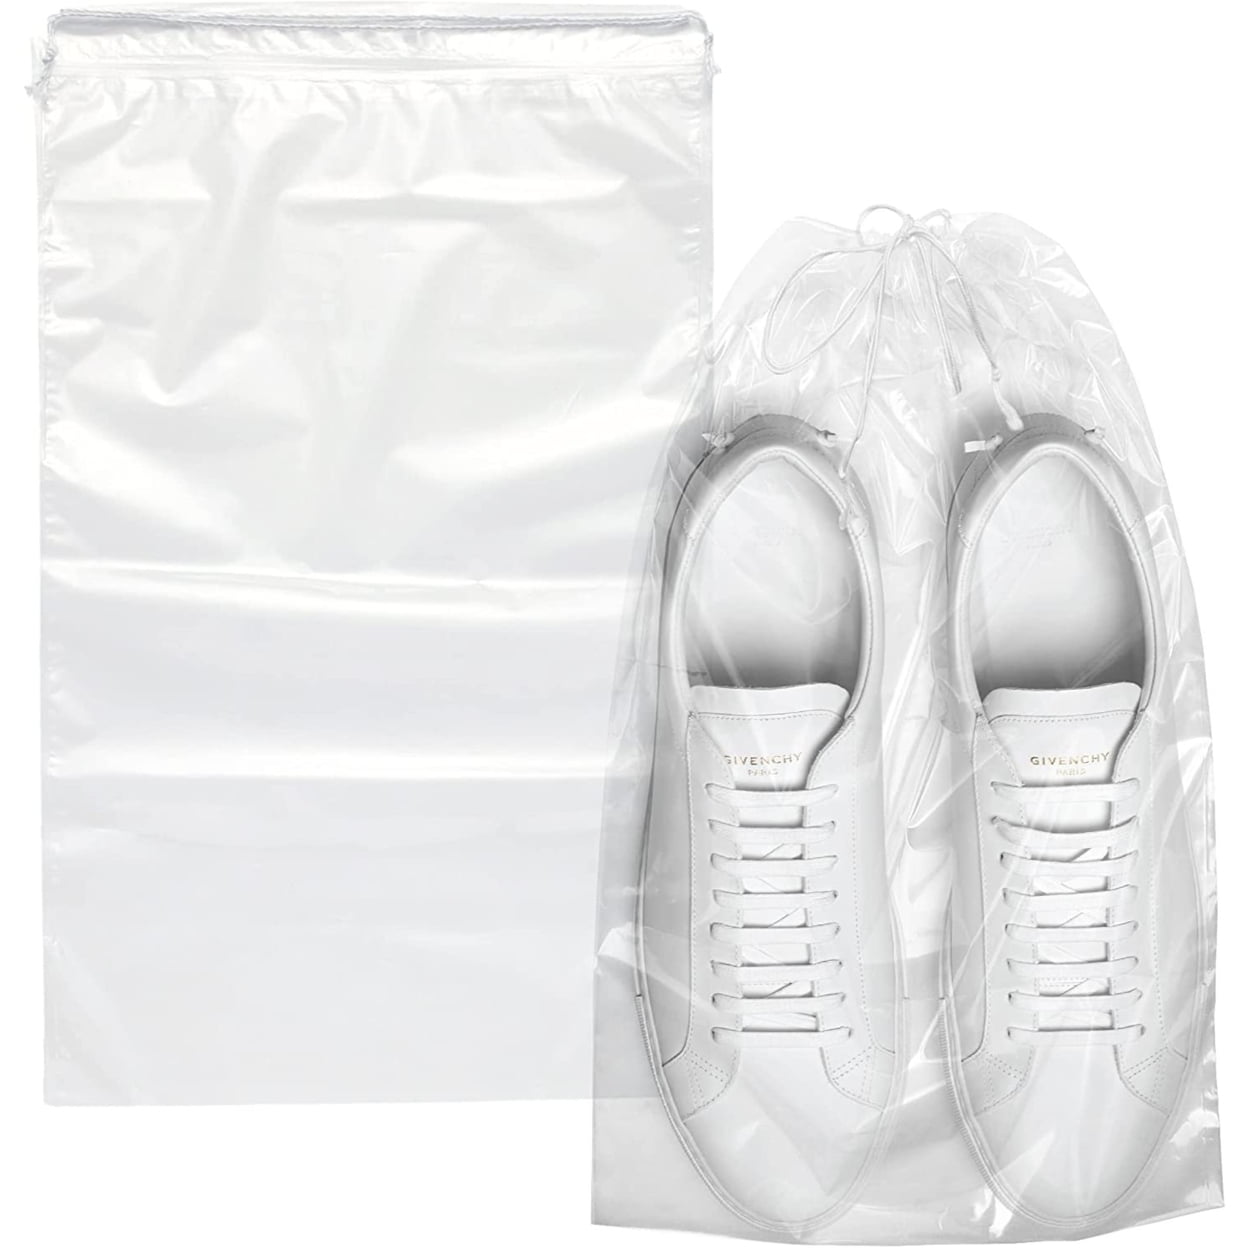 3 pieces of white transparent portable shoe bags, drawstring shoe